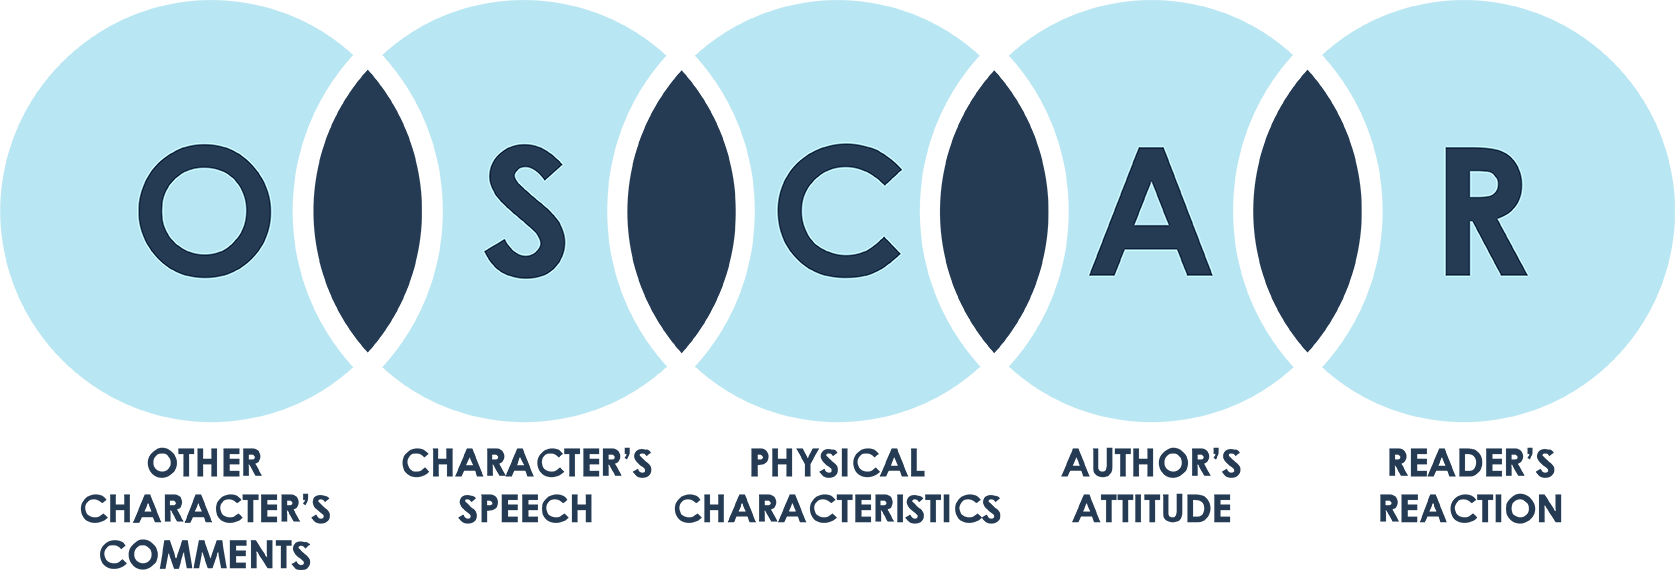 OSCAR-Charakteranalyse